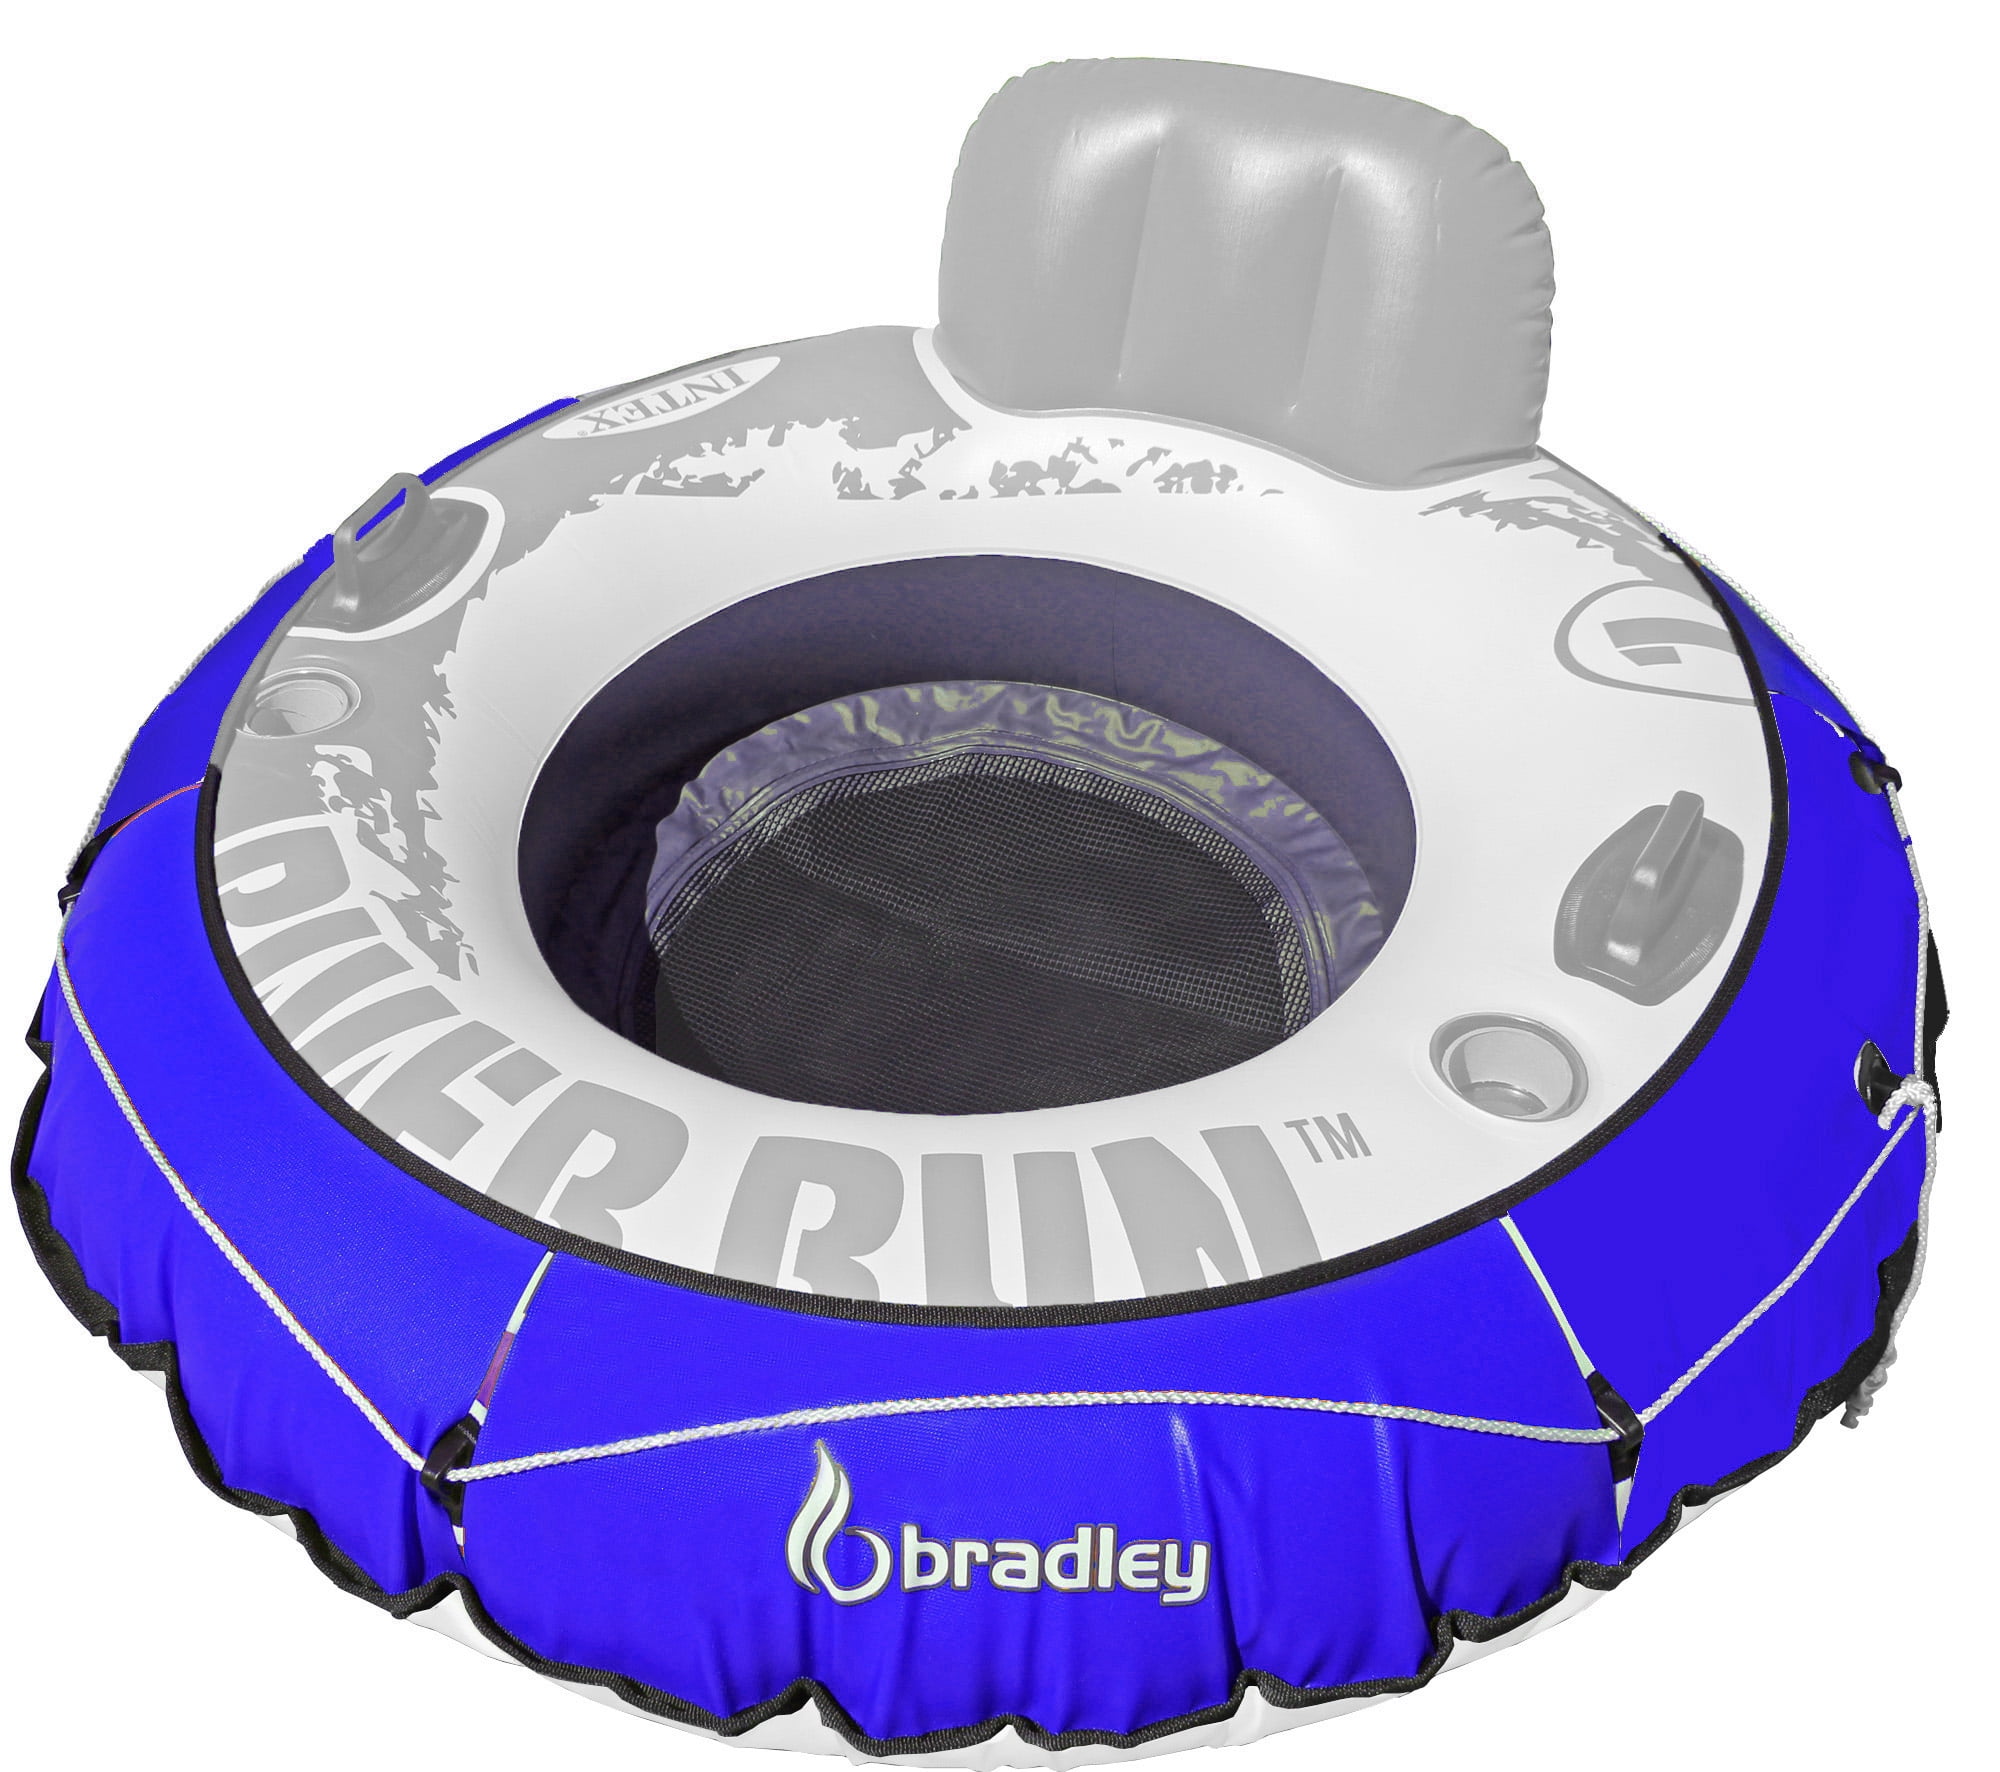 Bradley River run tube cover; compatibile with River Run tubes